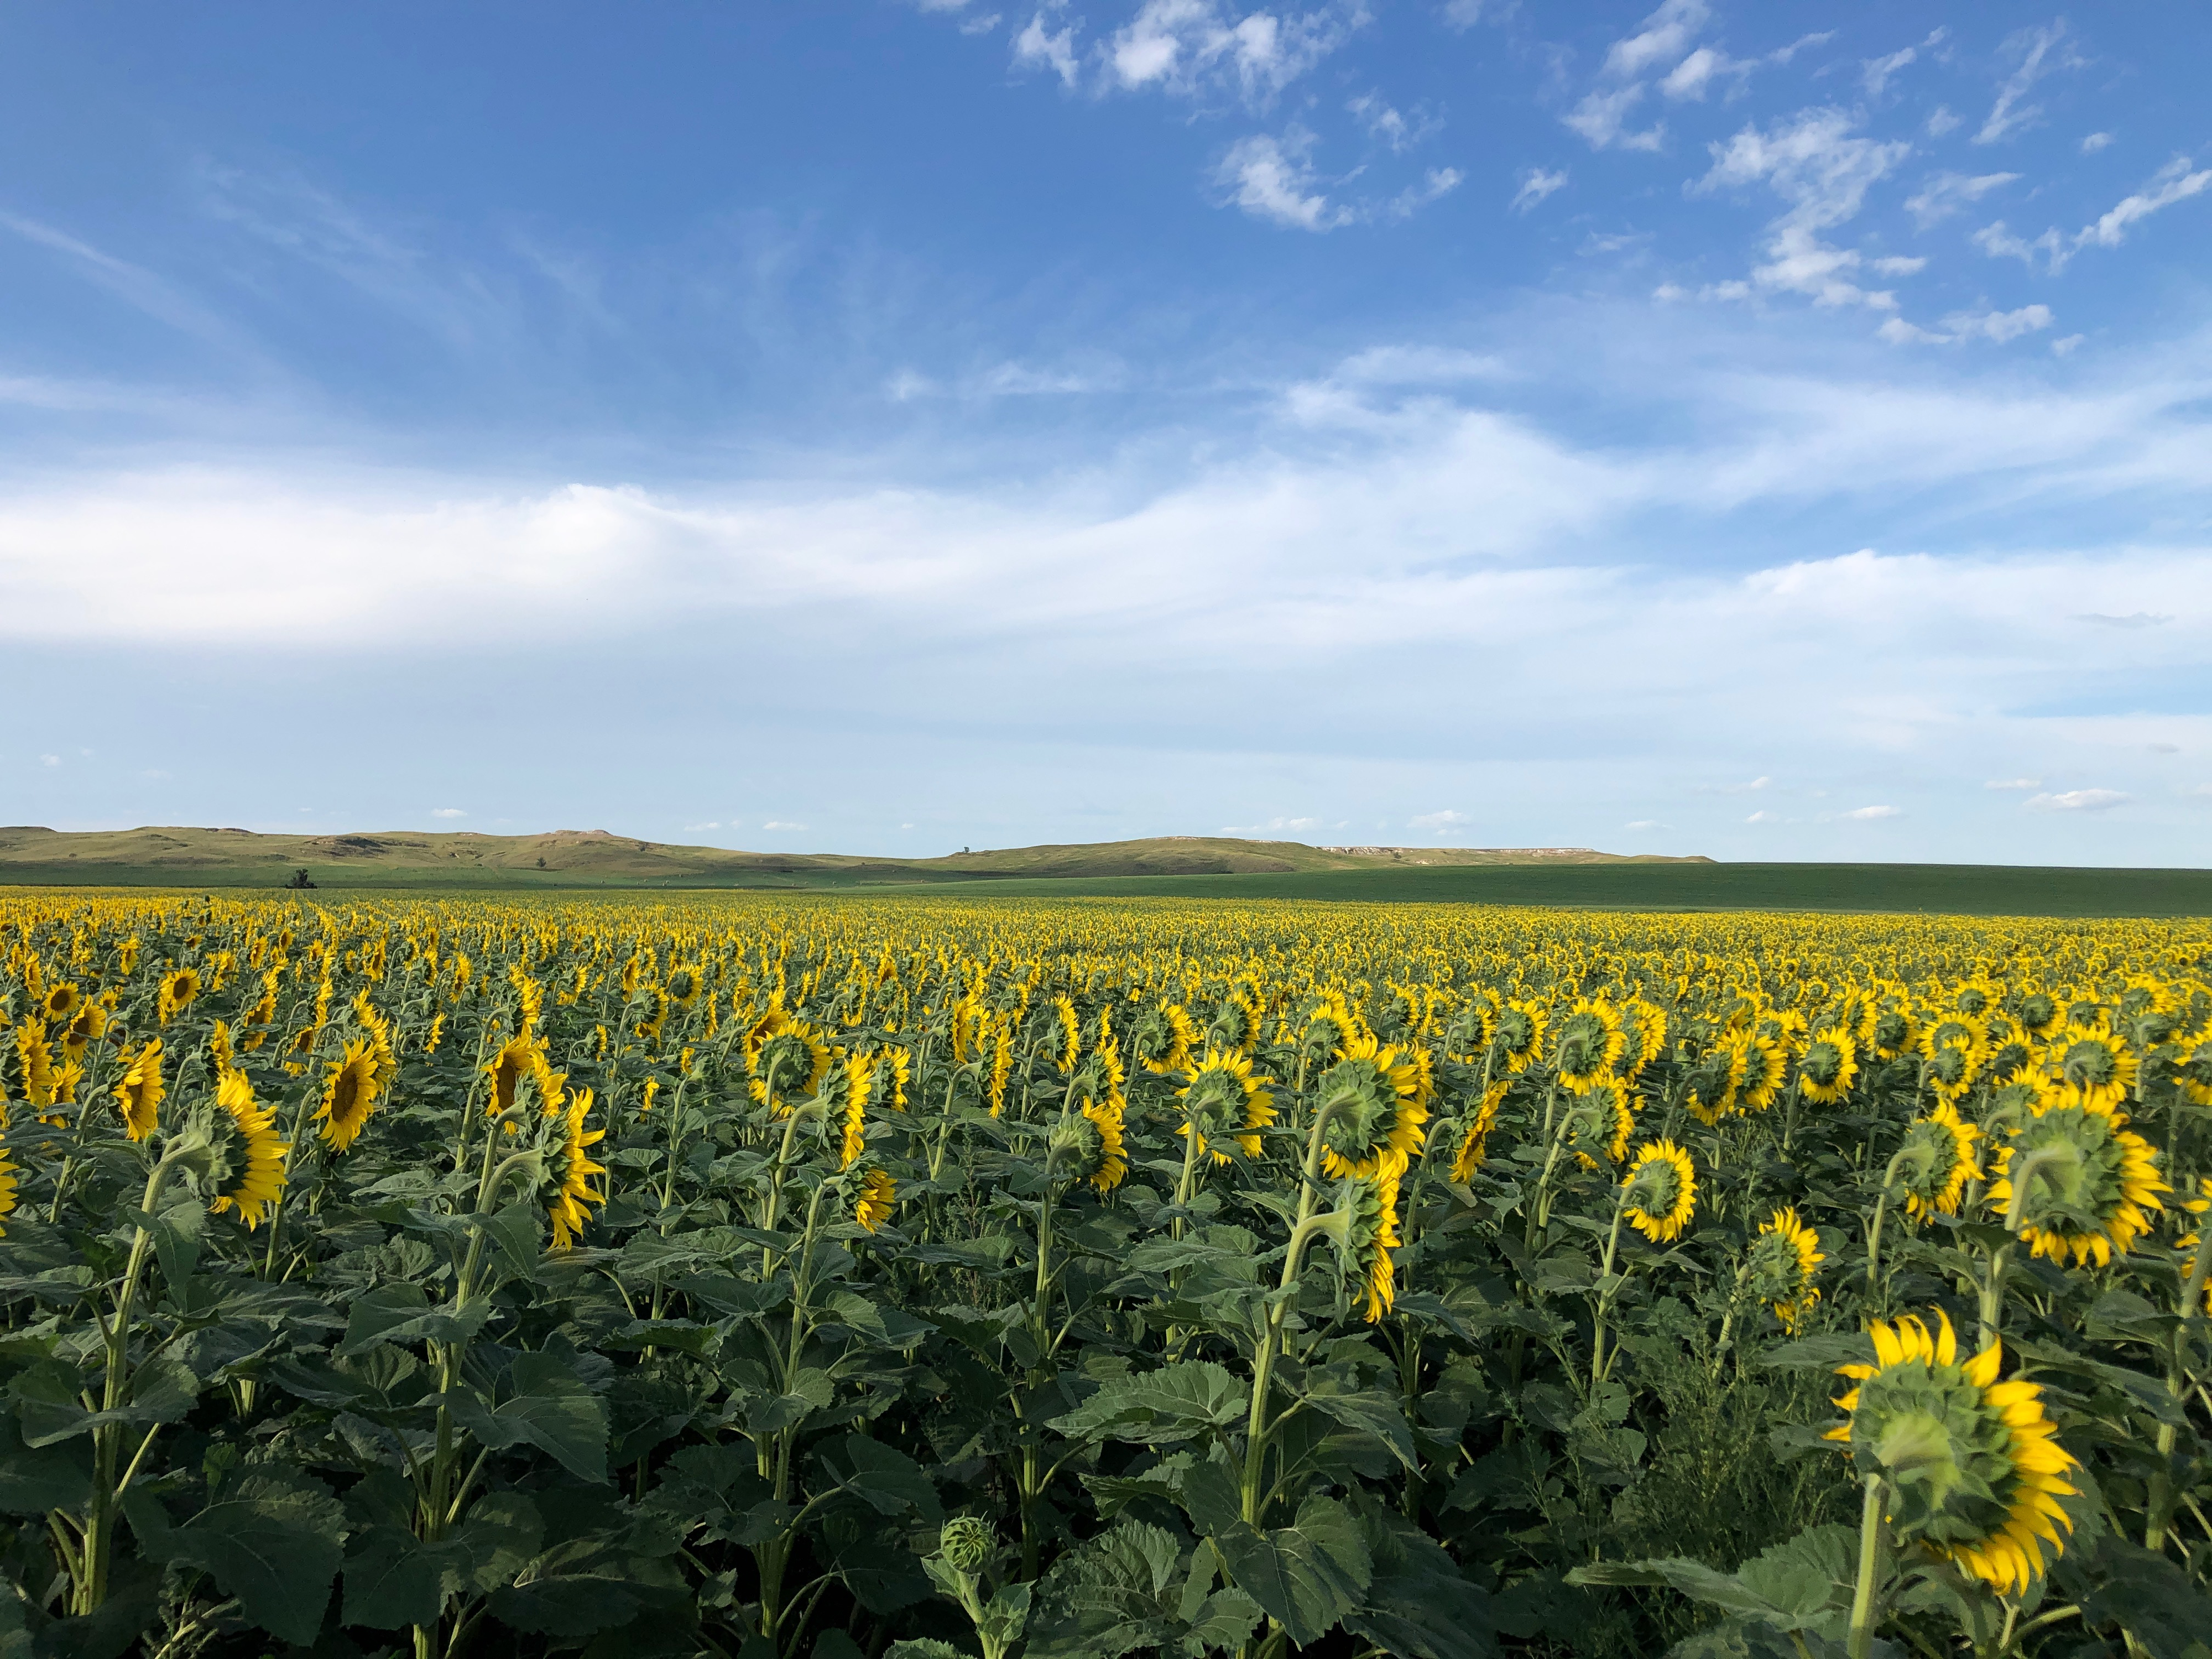 Morning Ag News, July 9, 2021: Sunflower farmer in northeast North Dakota says crop looks good